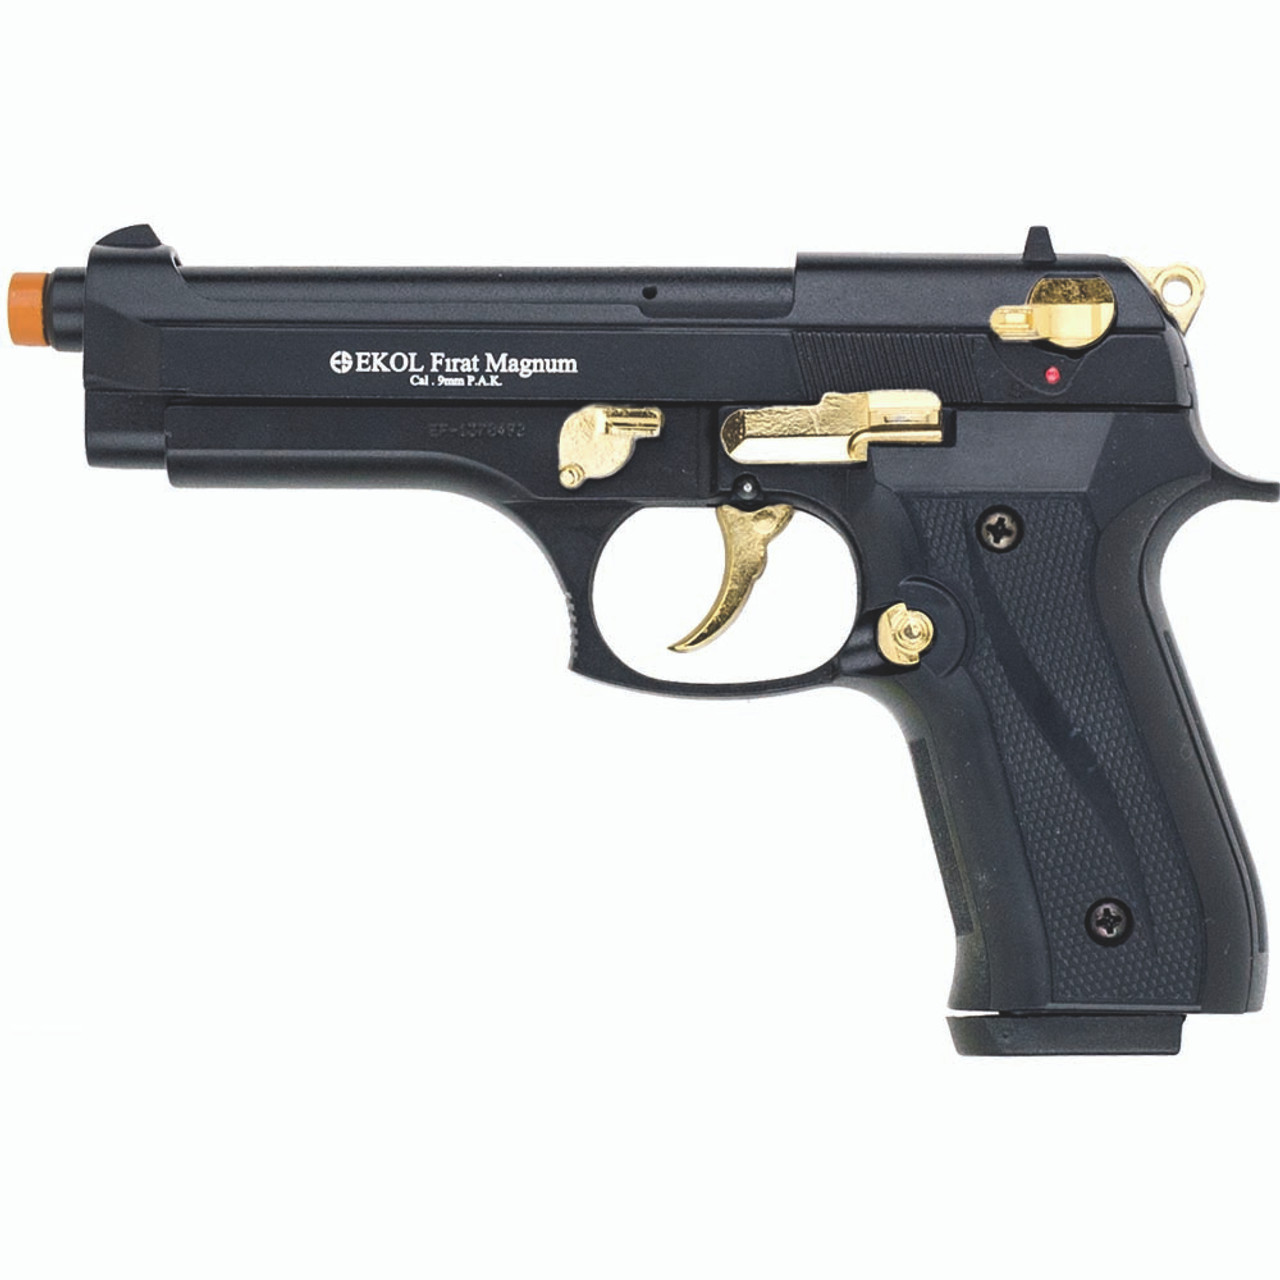 Pistola Fogueo Ekol Firat Magnum Satinada dorada labrada 9mm